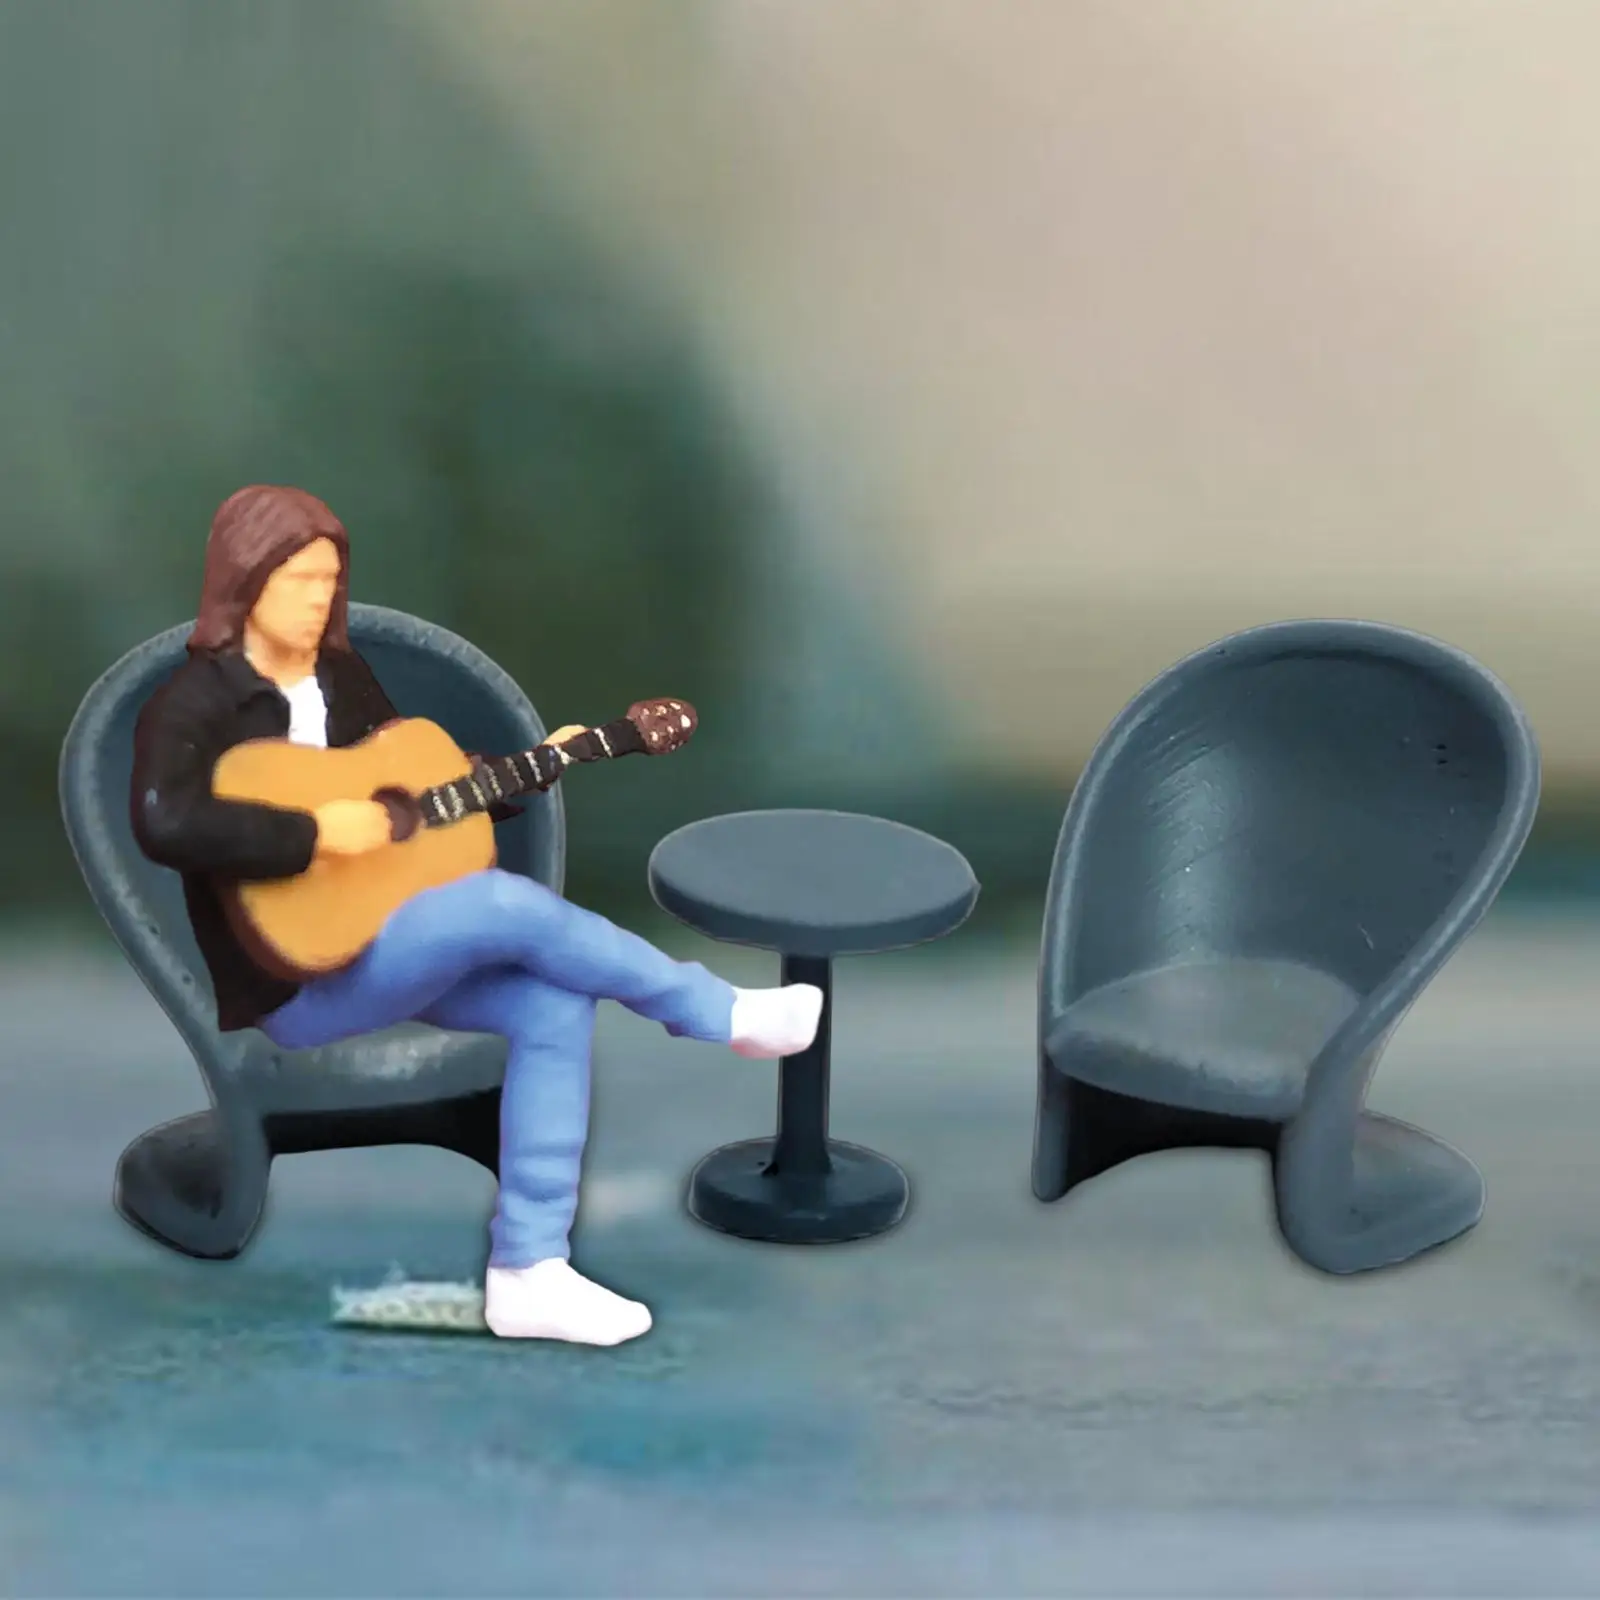 1/64 Scale Miniature Model Figure Movie Props 1/64 Music Figures for DIY Projects Decor Desktop Decoration Sand Table Decoration